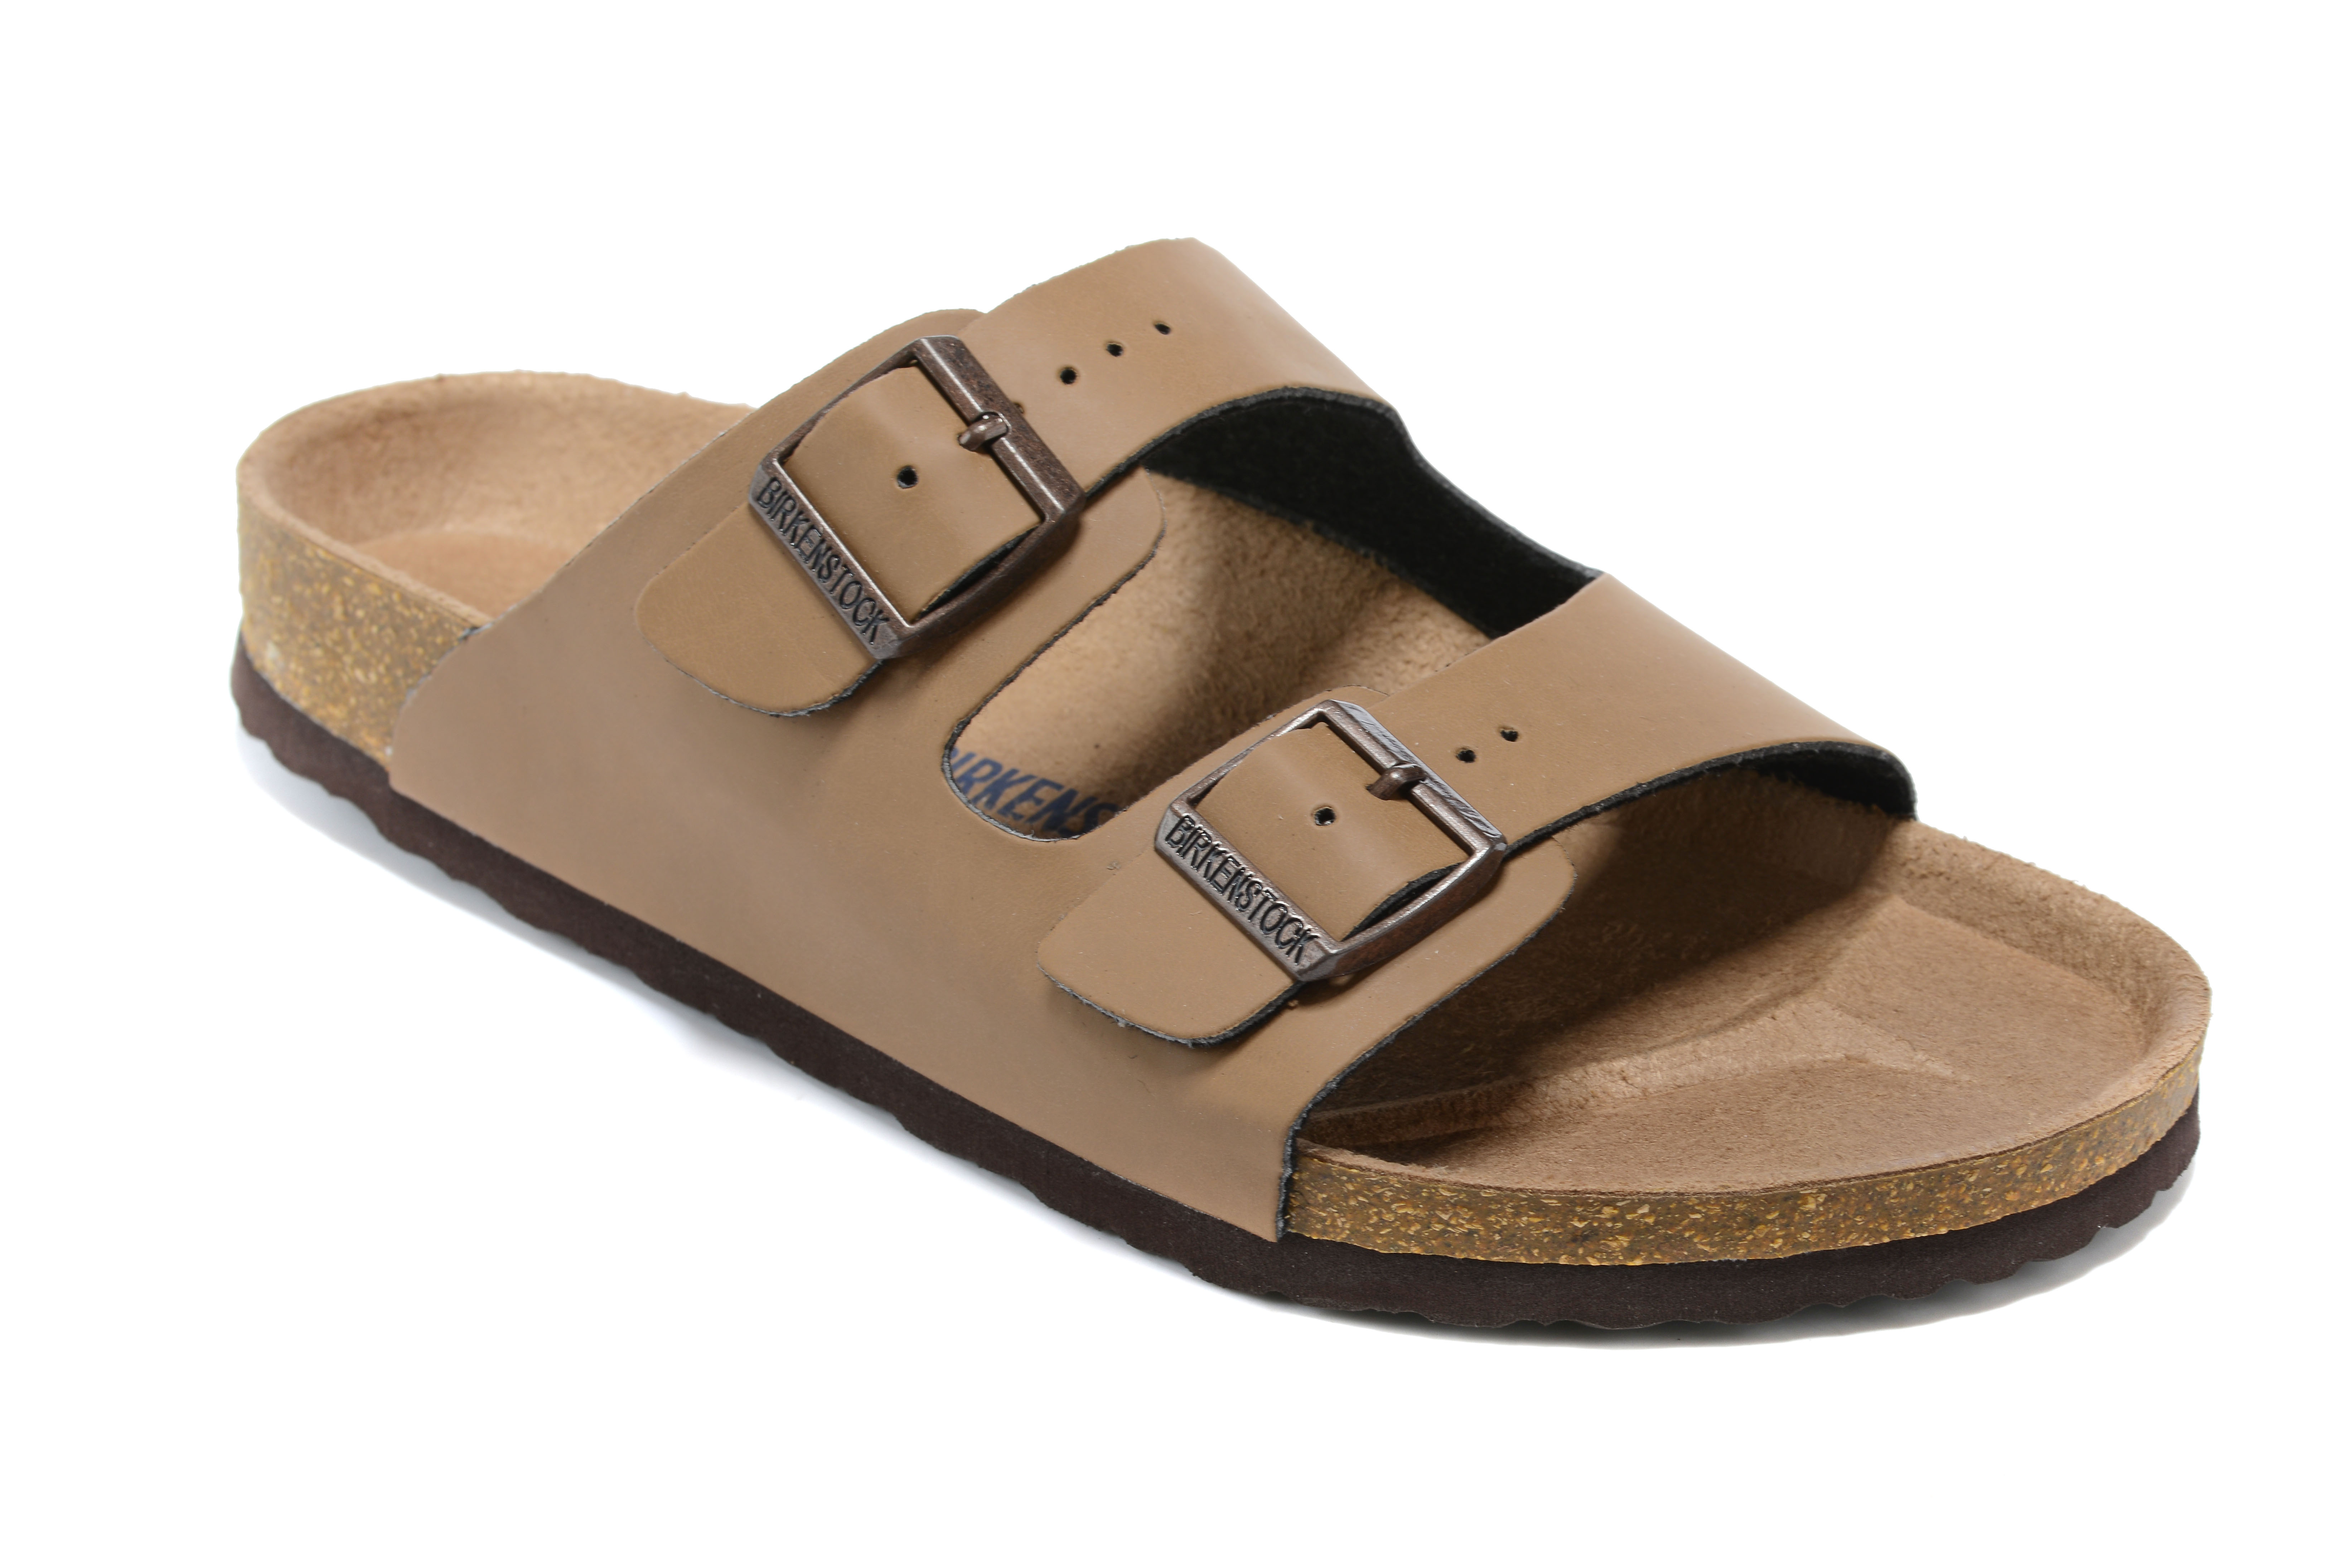 Birkenstock Arizona Leather Sandals Tobacco Brown - Stylish and Comfortable Footwear